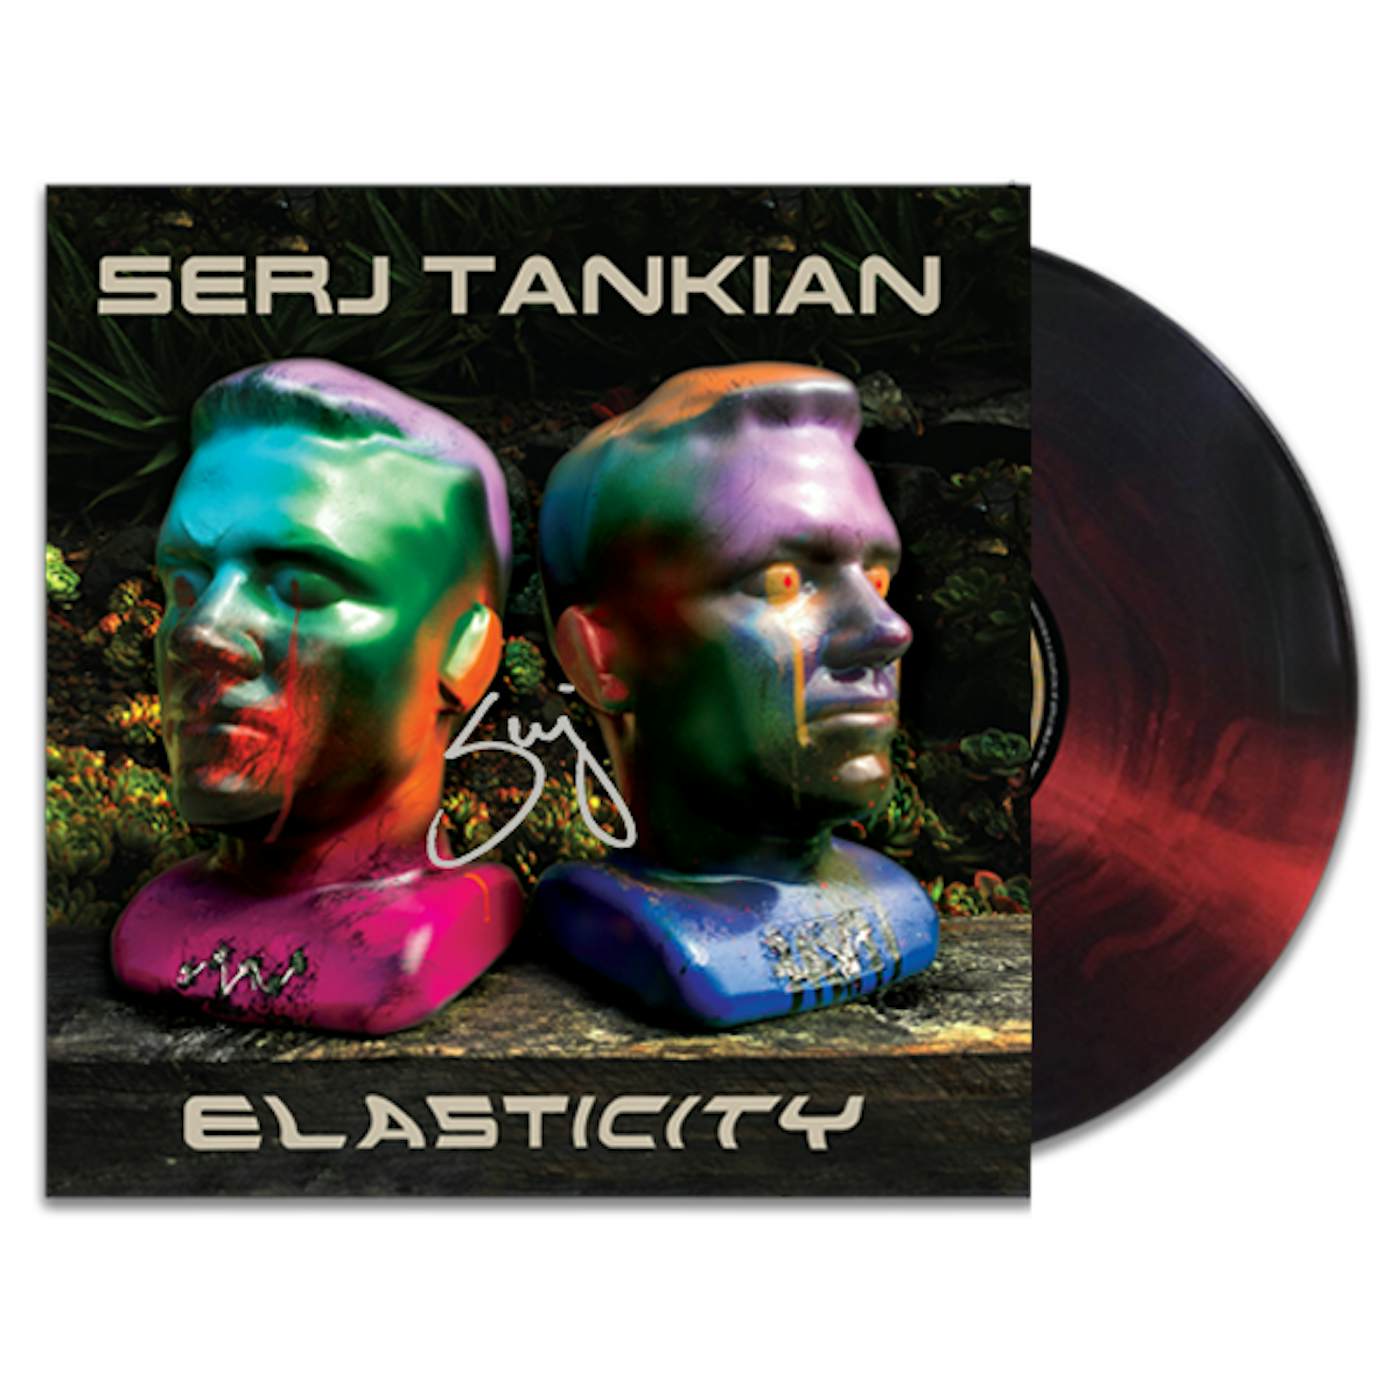 Serj Tankian Elasticity EP - Galaxy Colored Vinyl - Autographed Limited Edition